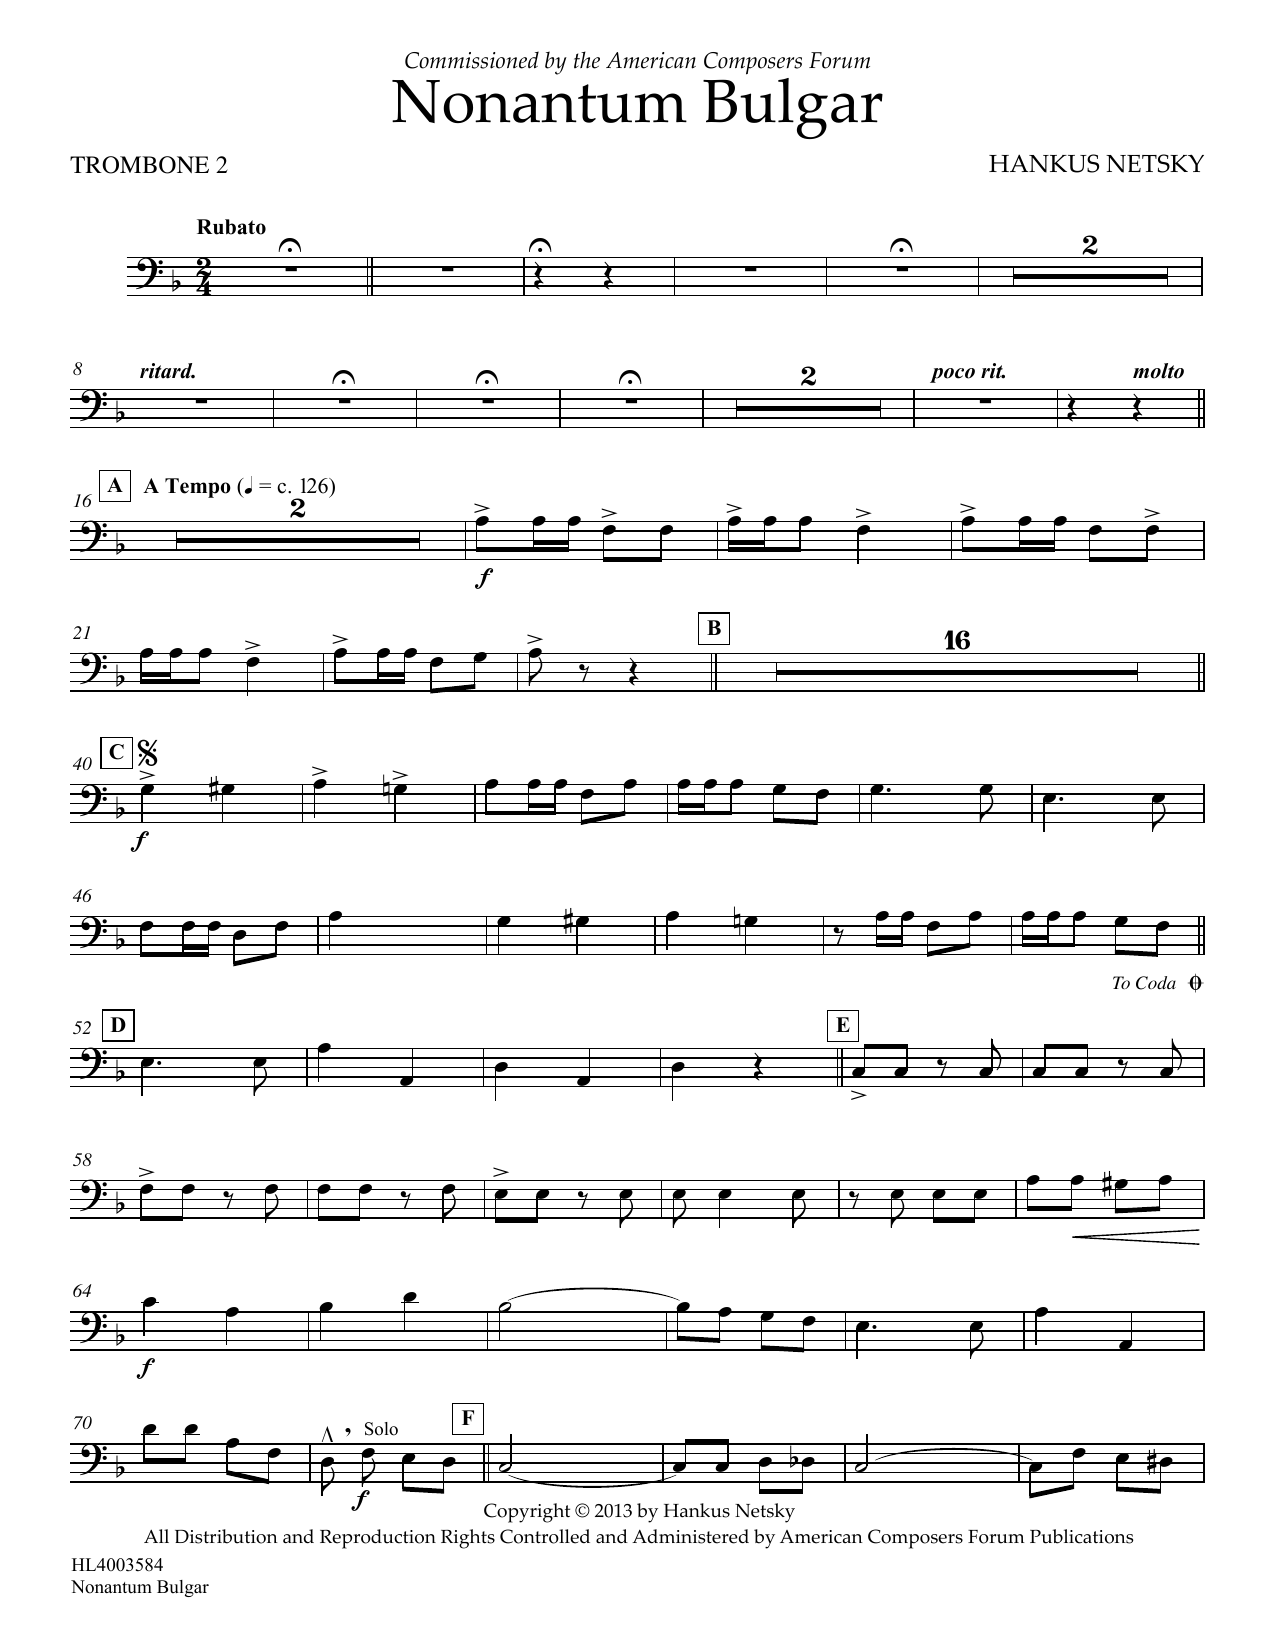 Download Hankus Netsky Nonantum Bulgar - Trombone 2 Sheet Music and learn how to play Concert Band PDF digital score in minutes